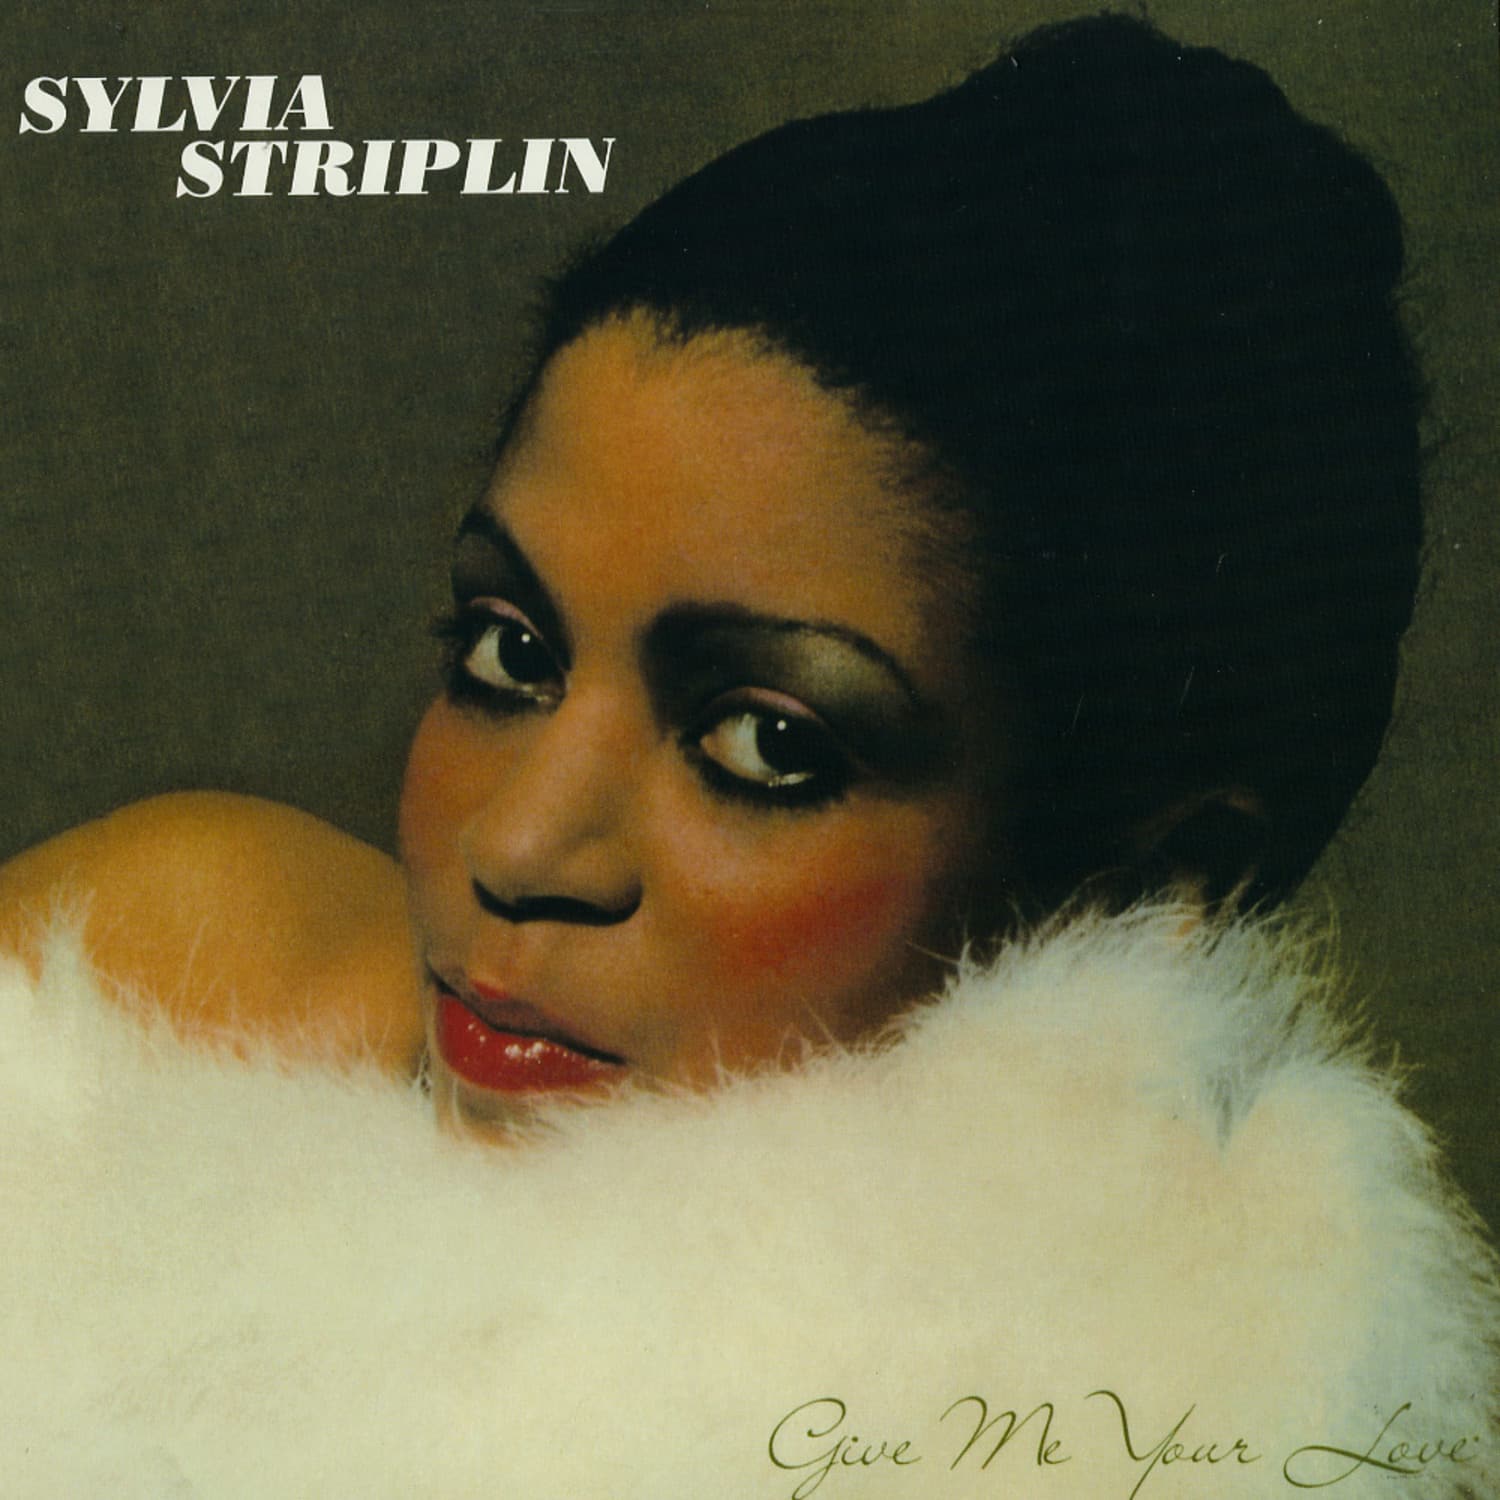 Sylvia Striplin - GIVE ME YOUR LOVE 